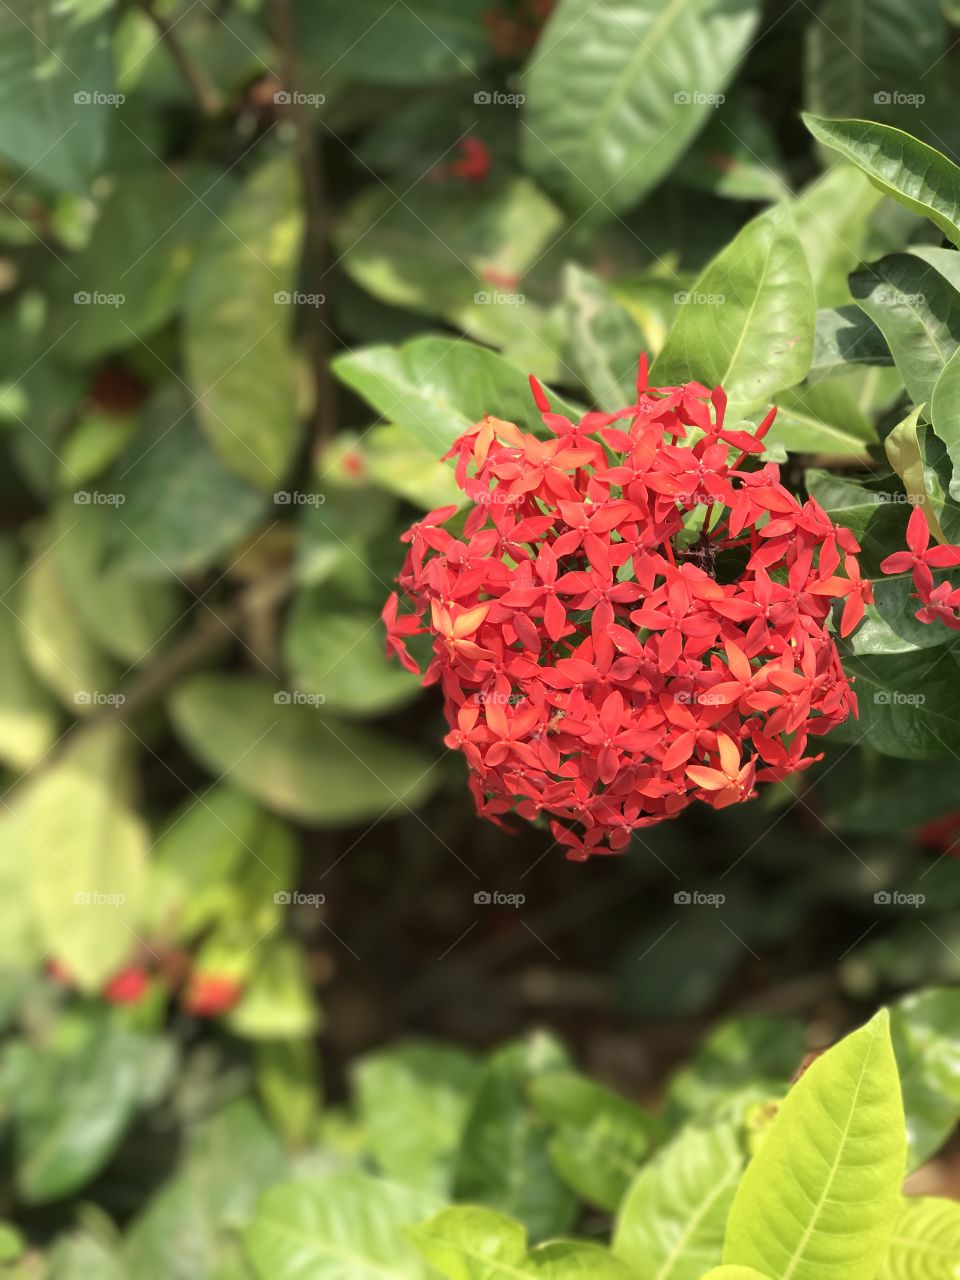 Bright vibrant red flower closeup shot.